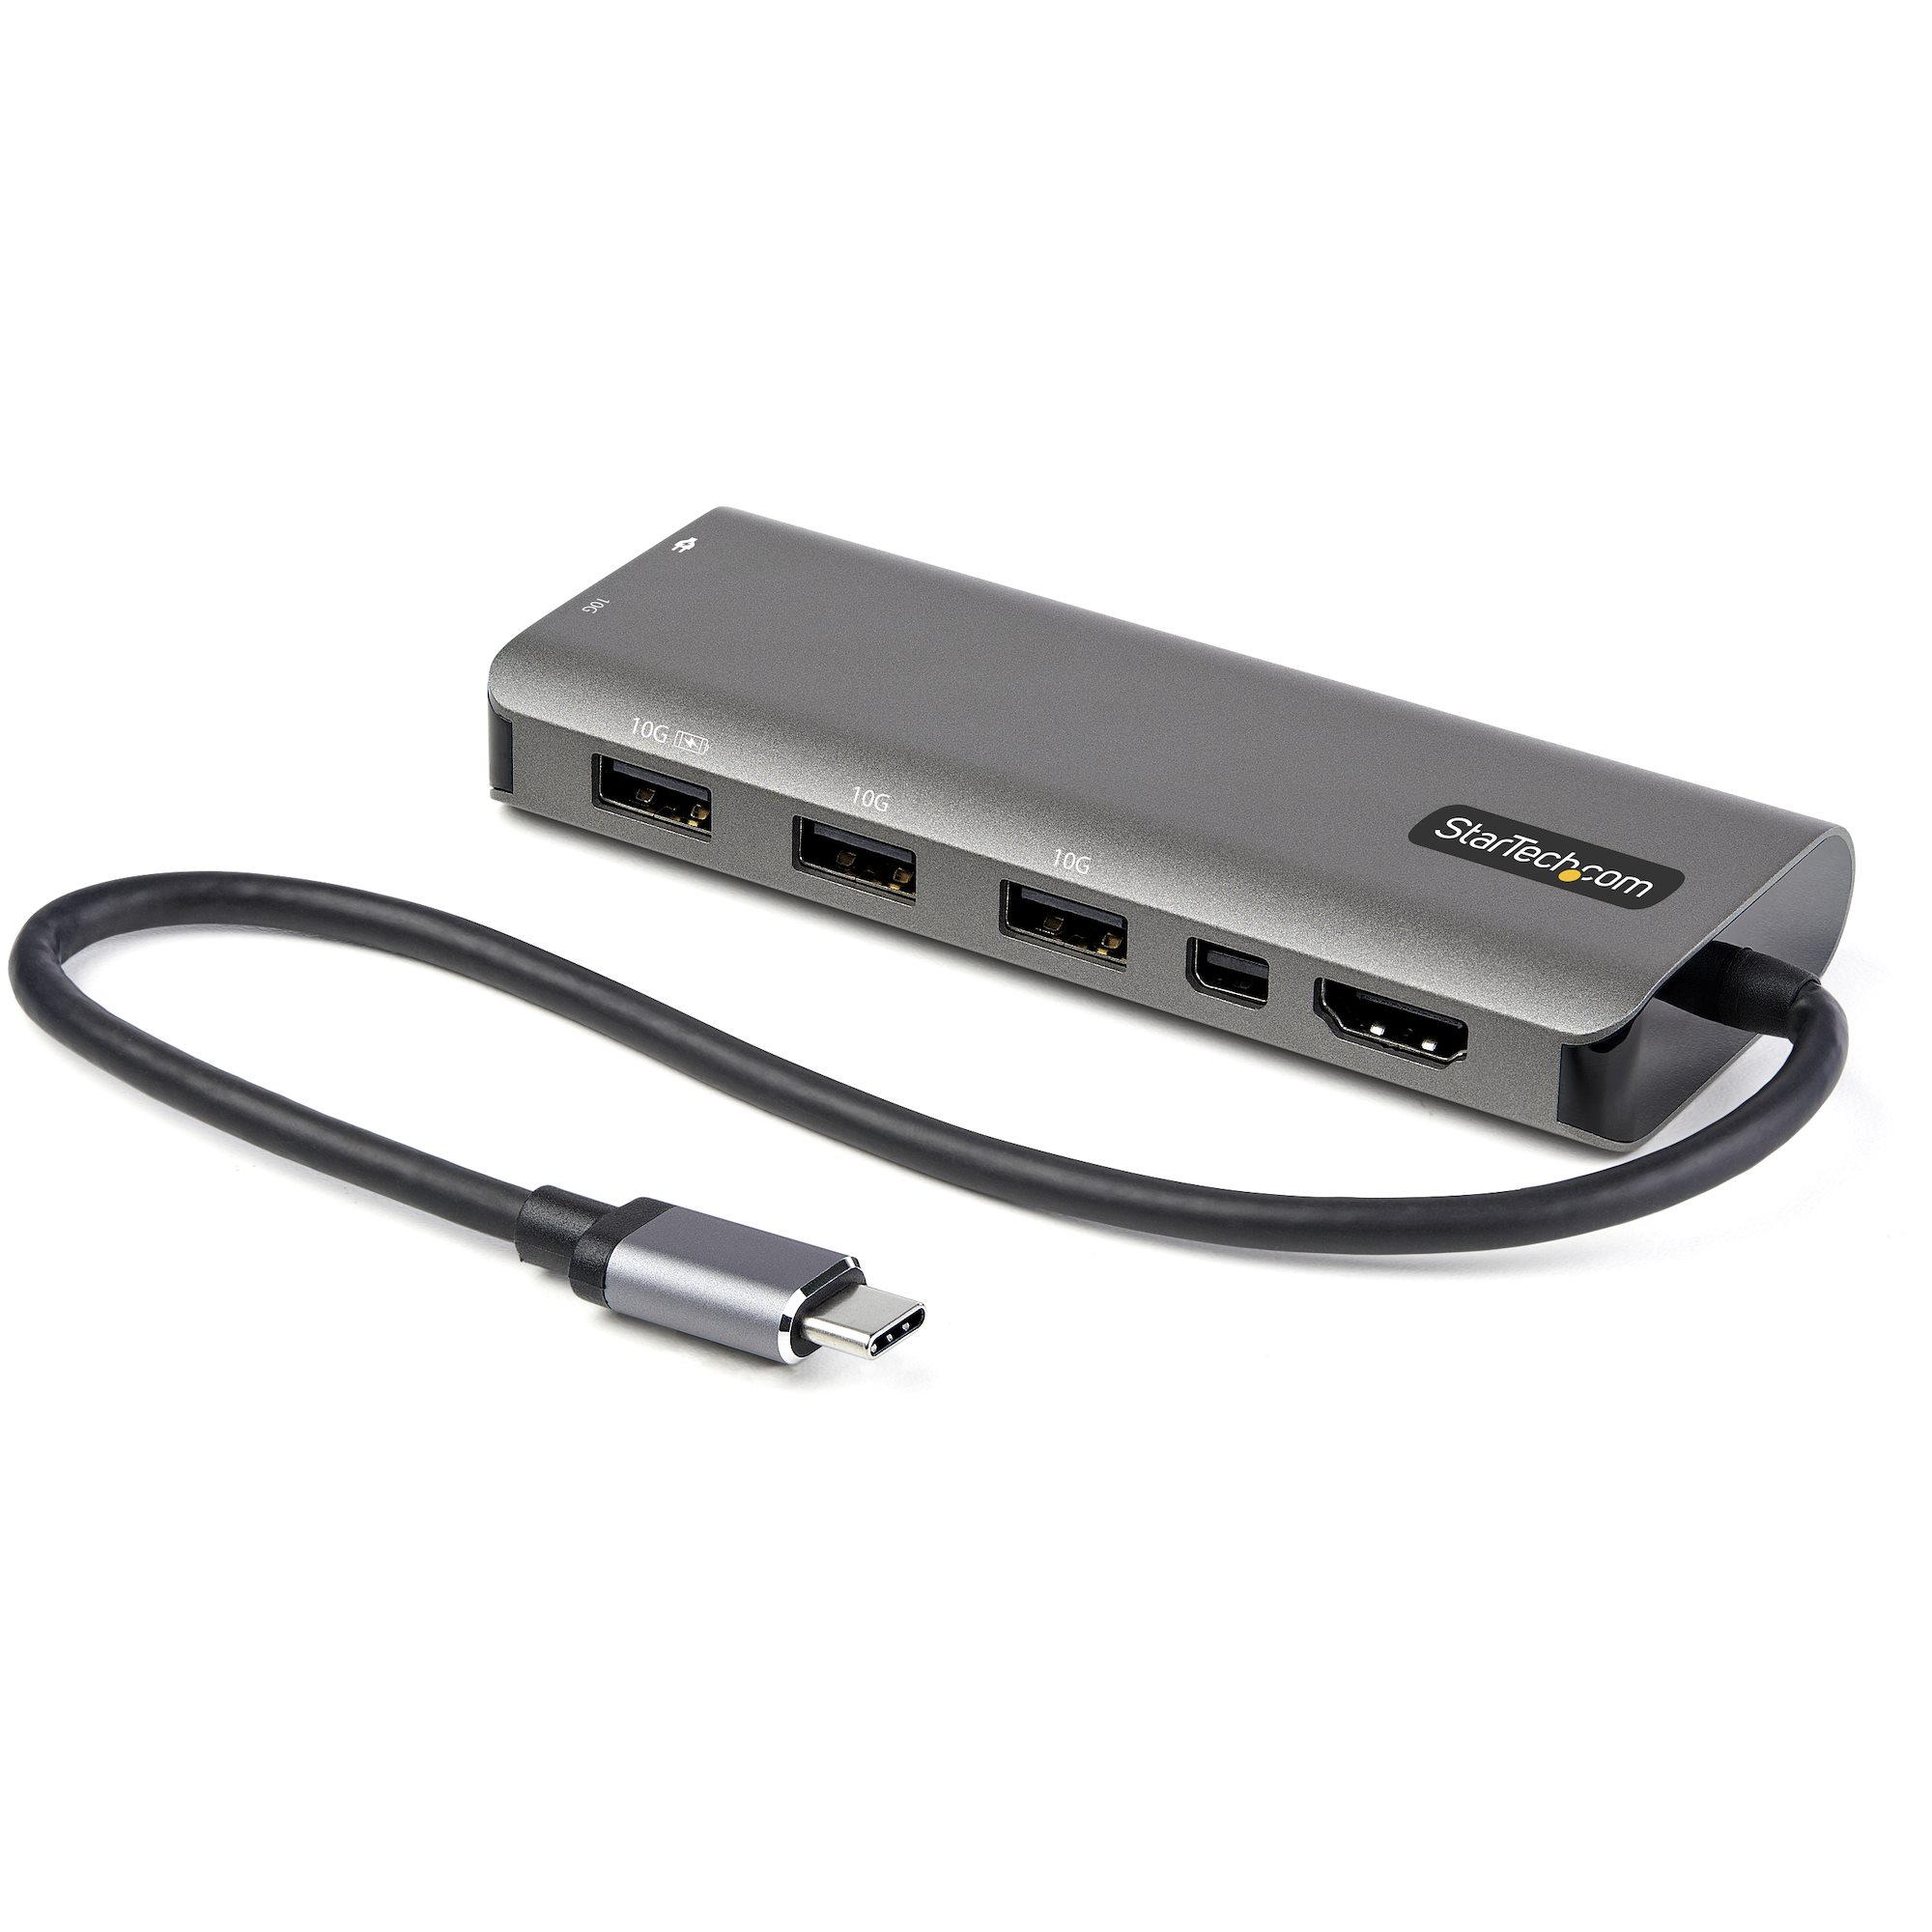 【DKT31CMDPHPD】USB C MULTIPORT ADAPTER - USB-C